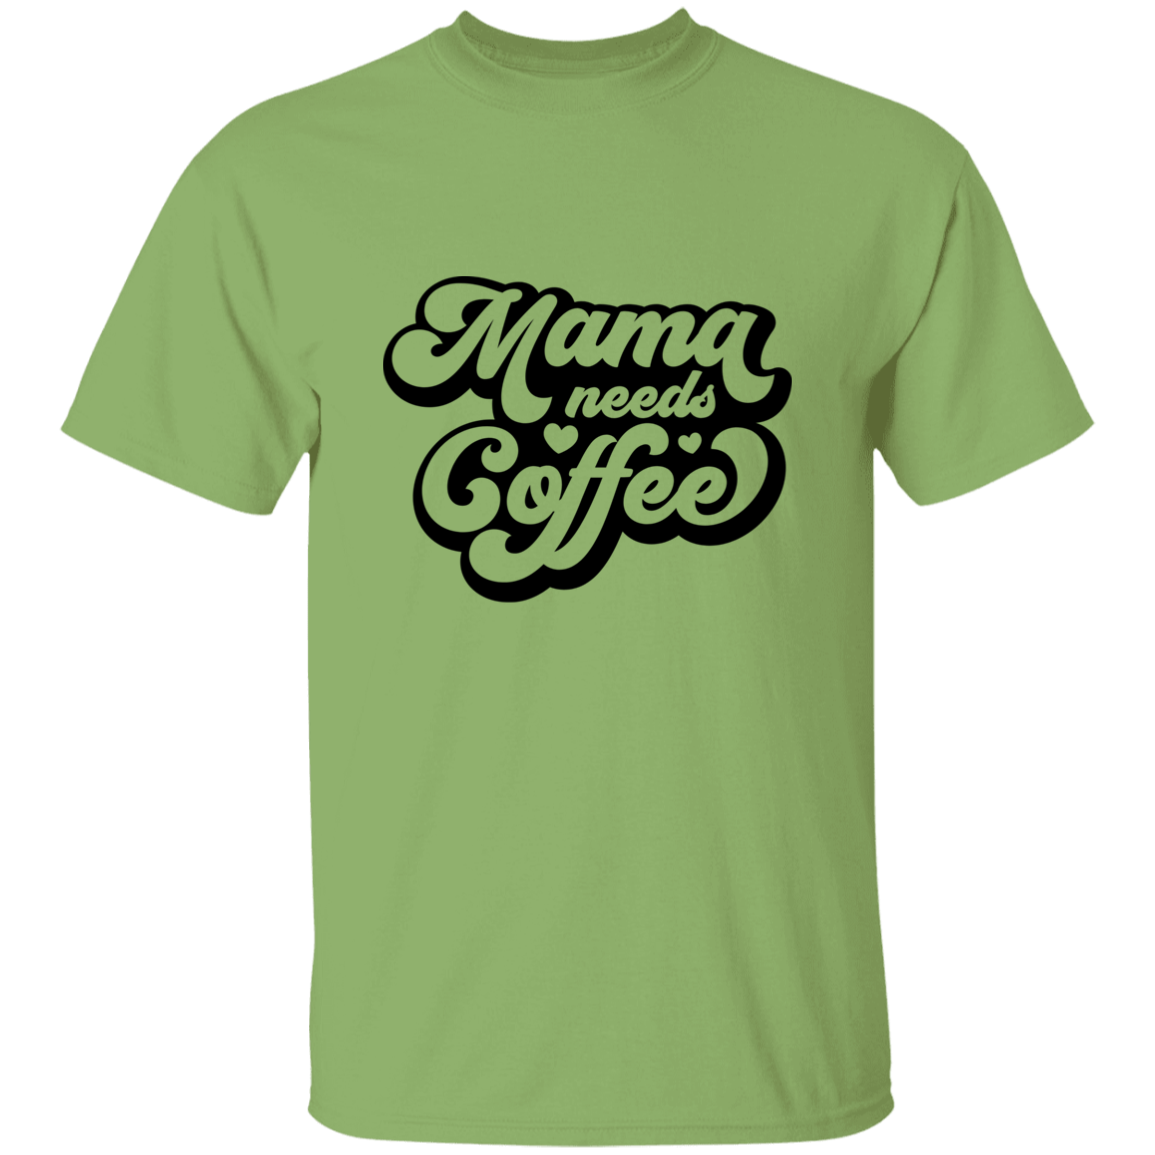 Mama needs Coffee T-Shirt